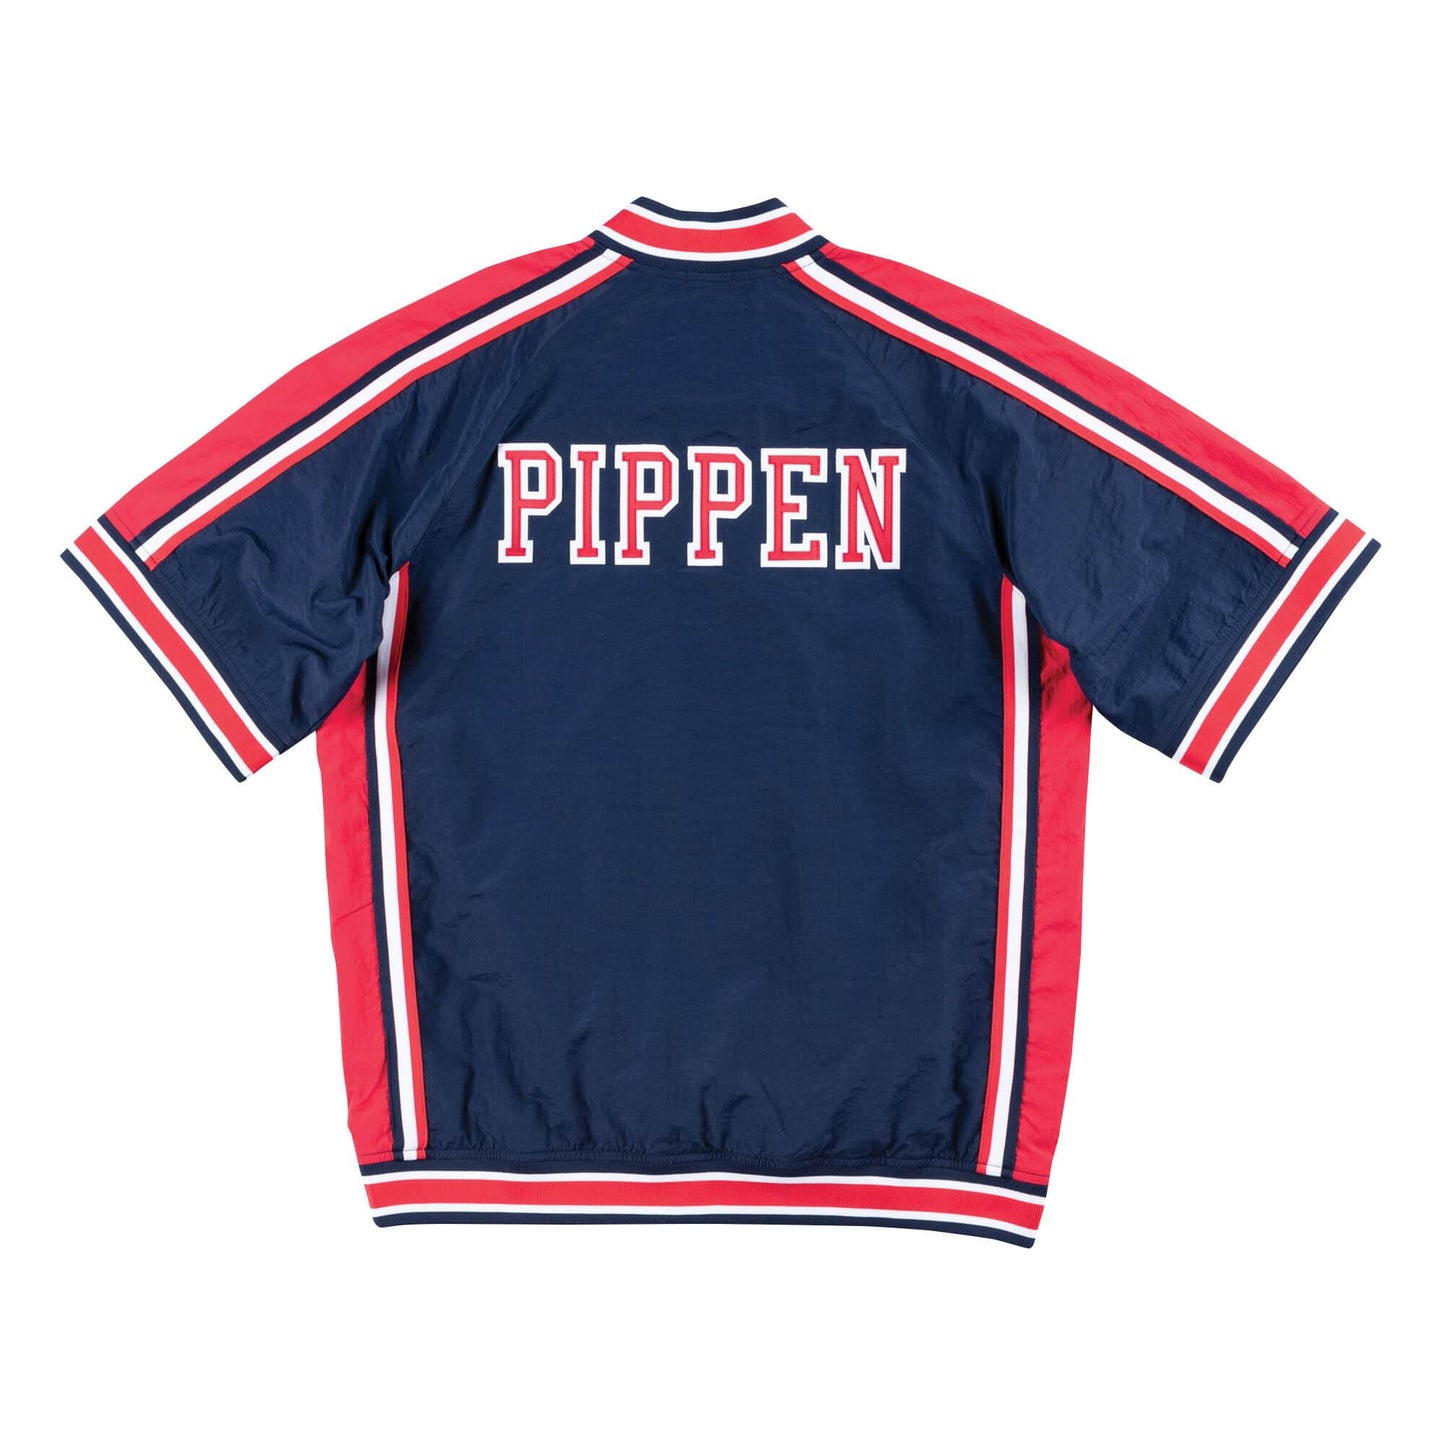 Authentic Warm Up Jacket Team USA 1992 Scottie Pippen